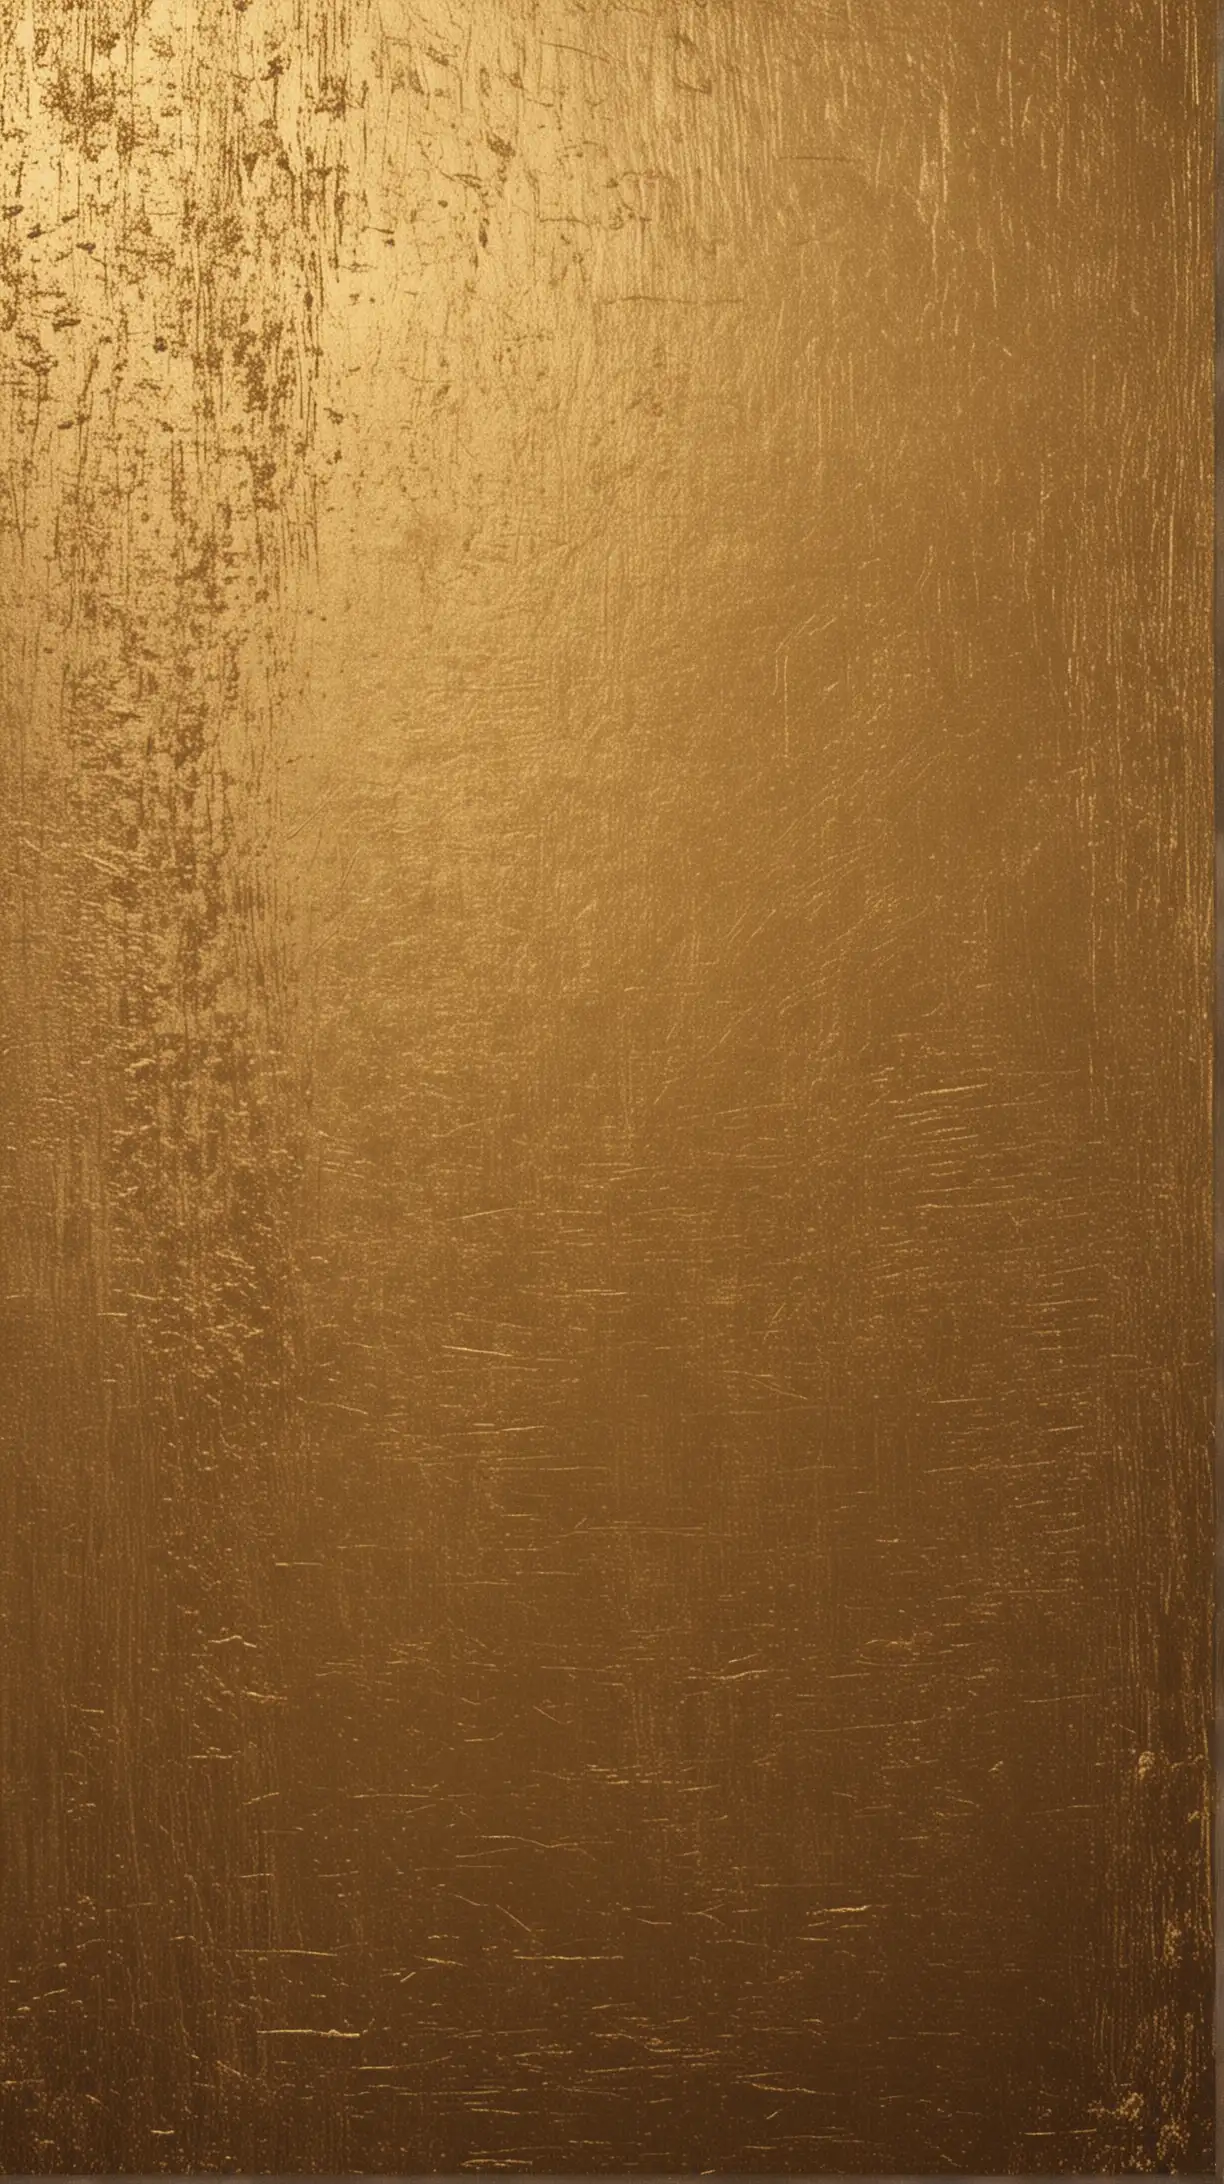 Elegant Metallic Gold Texture with Monochrome Background